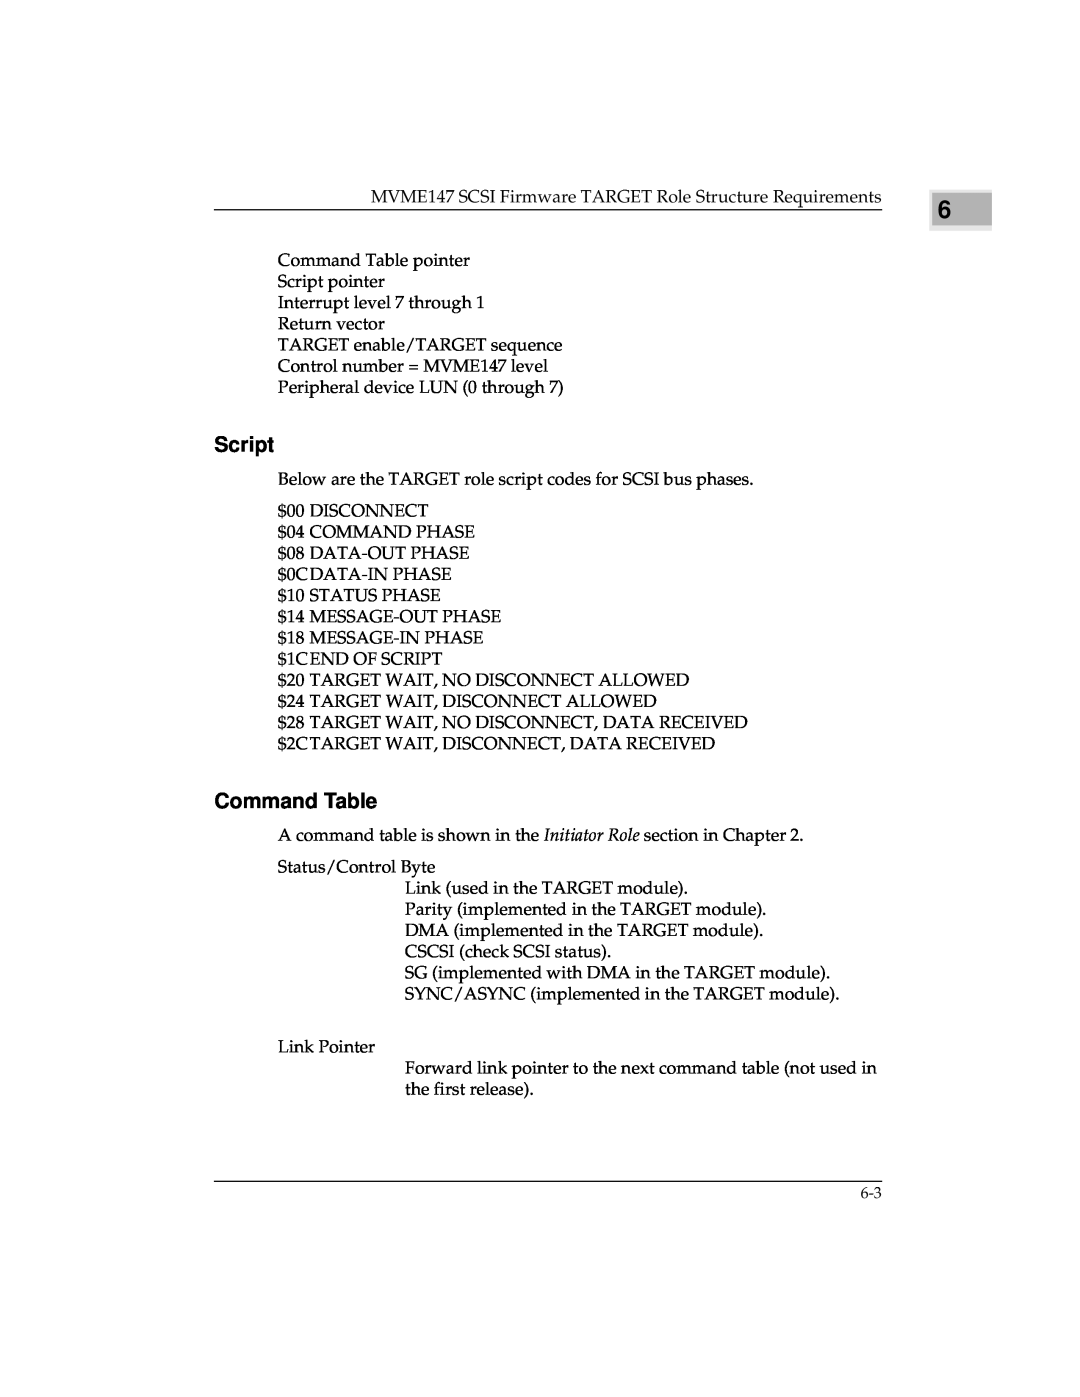 Emerson MVME147 manual Script, Command Table 